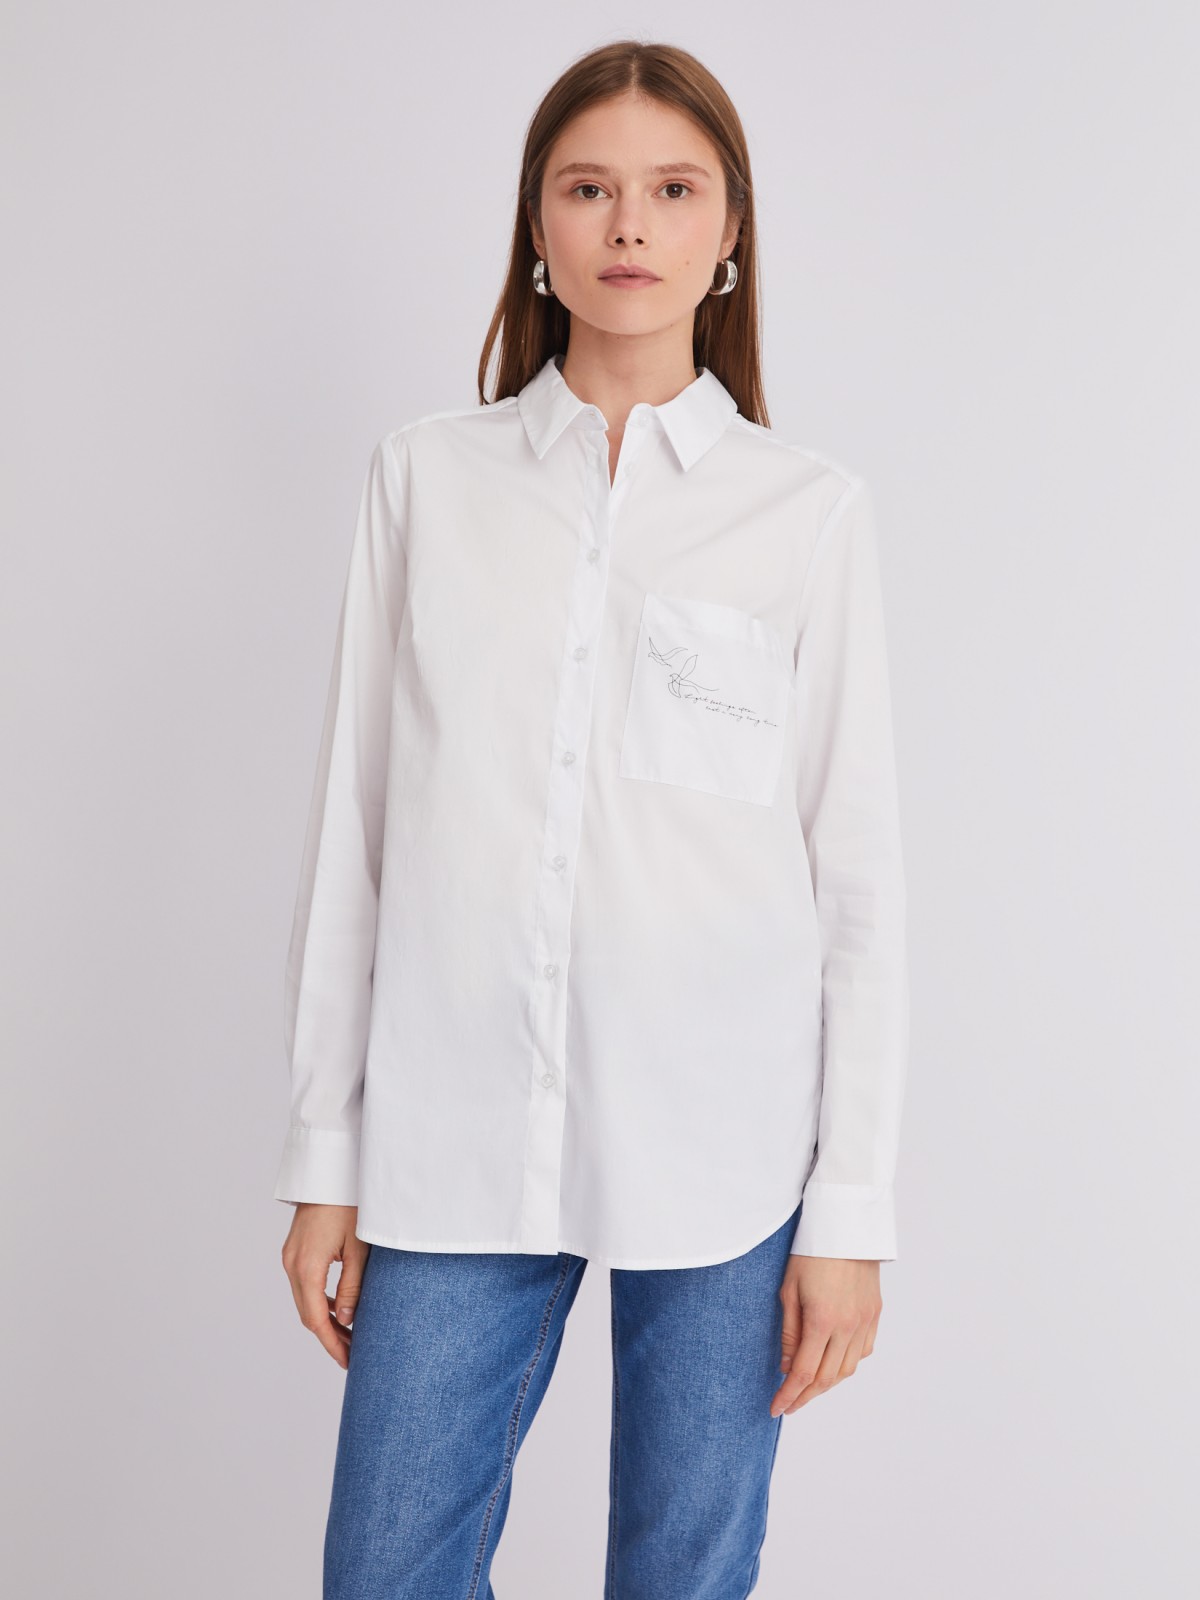 Офисная рубашка прямого силуэта с акцентом на кармане zolla 223311159042, цвет белый, размер S - фото 4